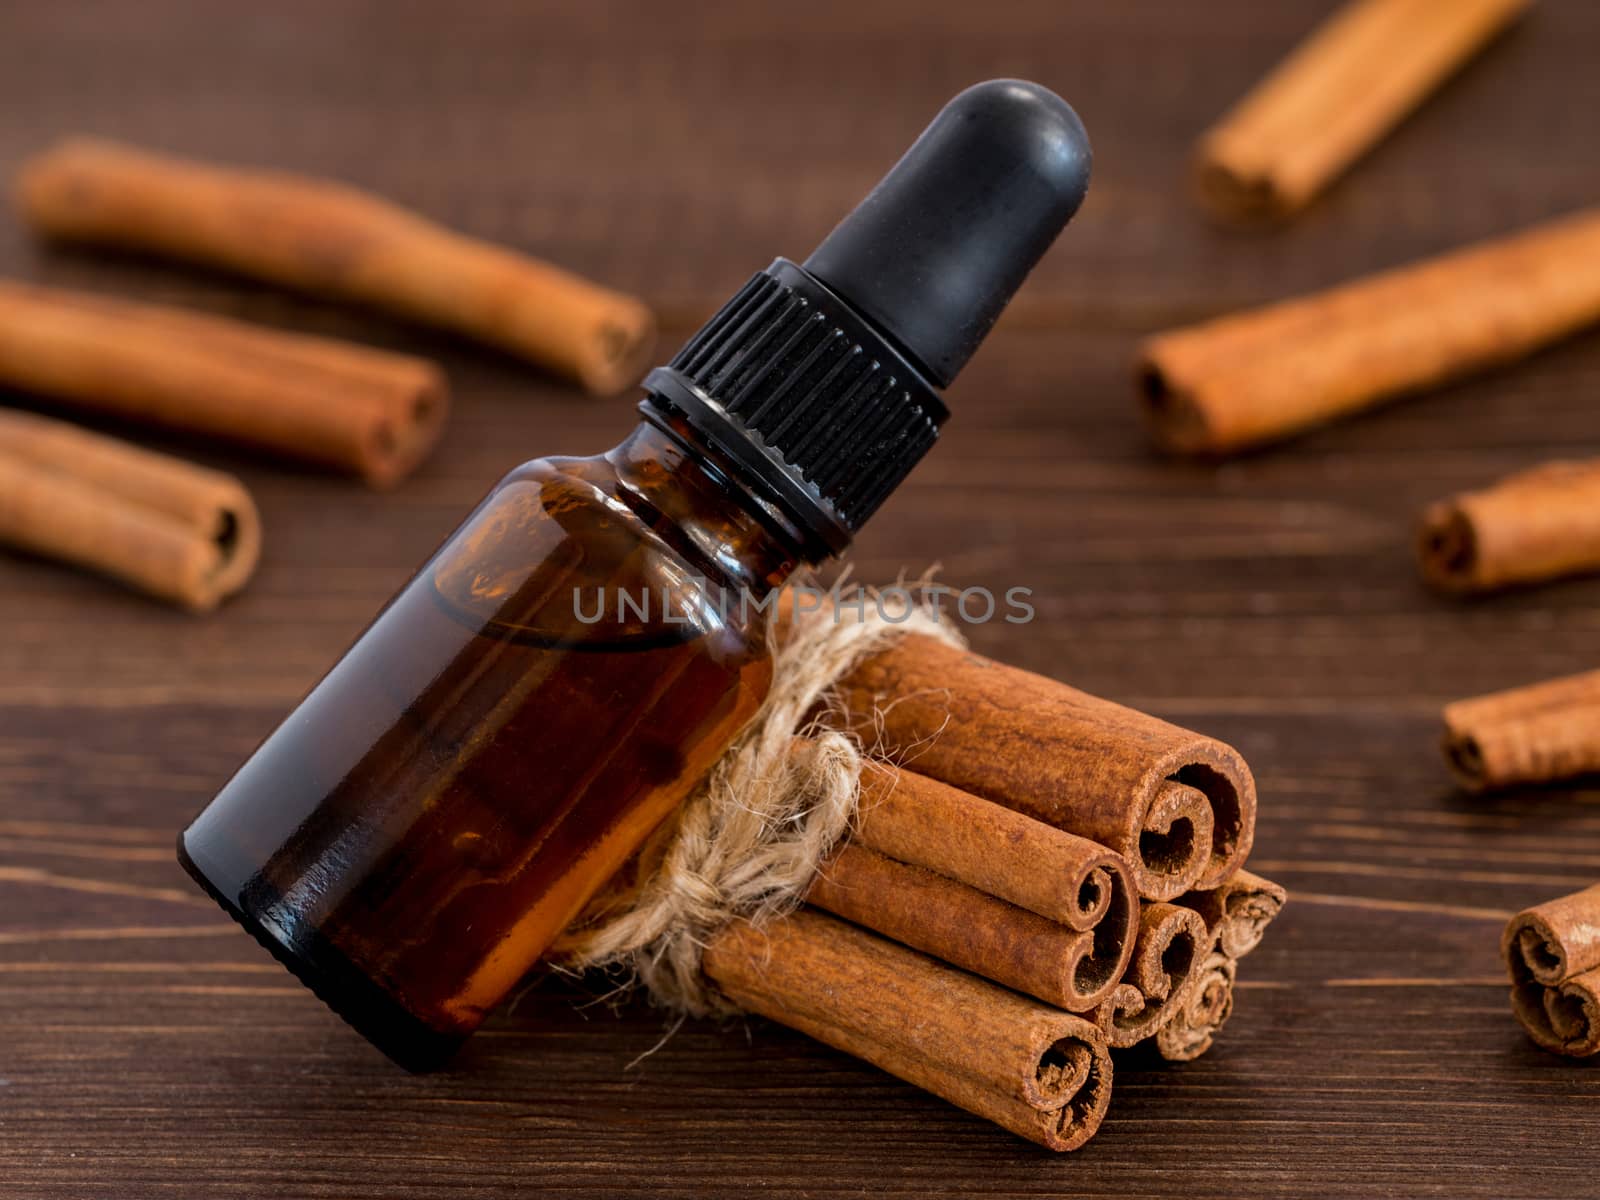 Cinnamon sticks and bottle with cinnamon essential oil